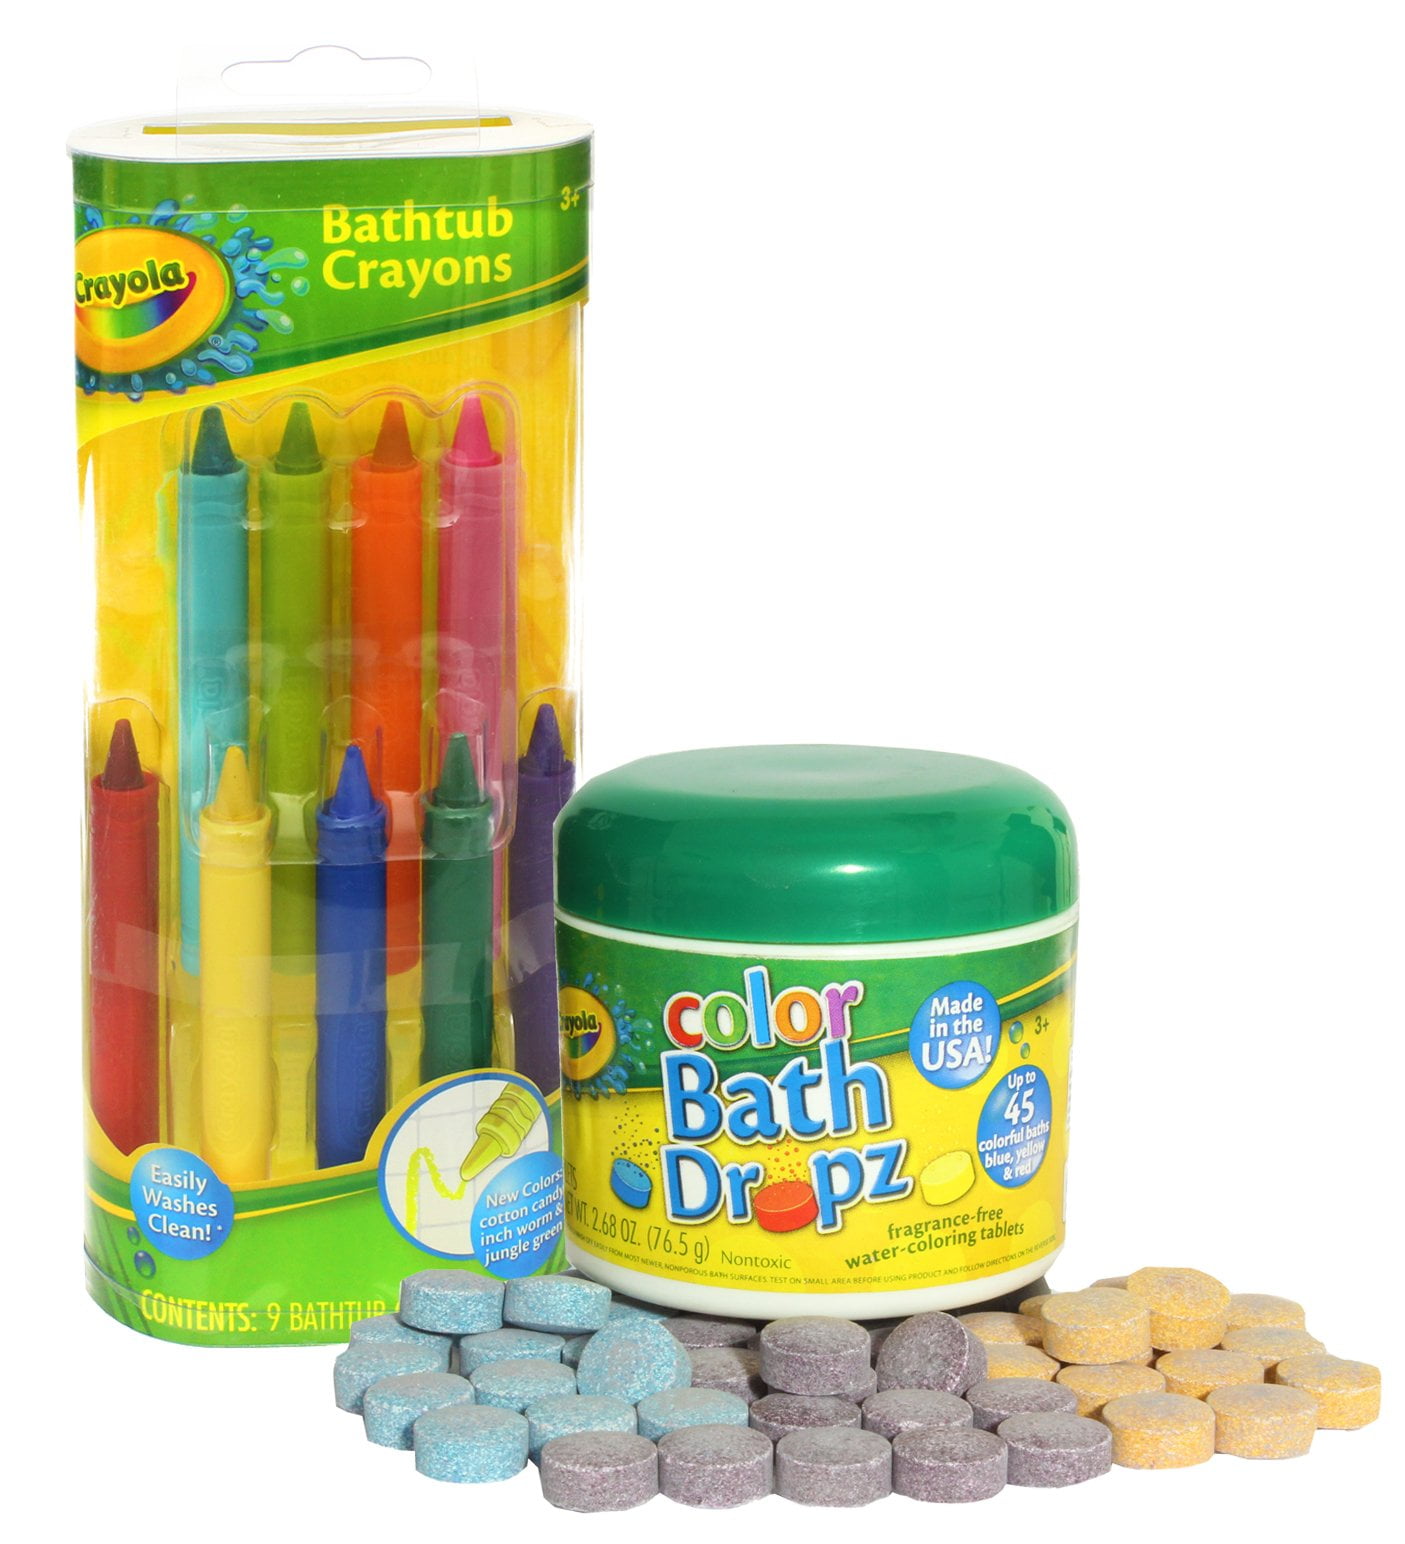 Crayola Bath Dropz 3.59 oz 60 Tablets 